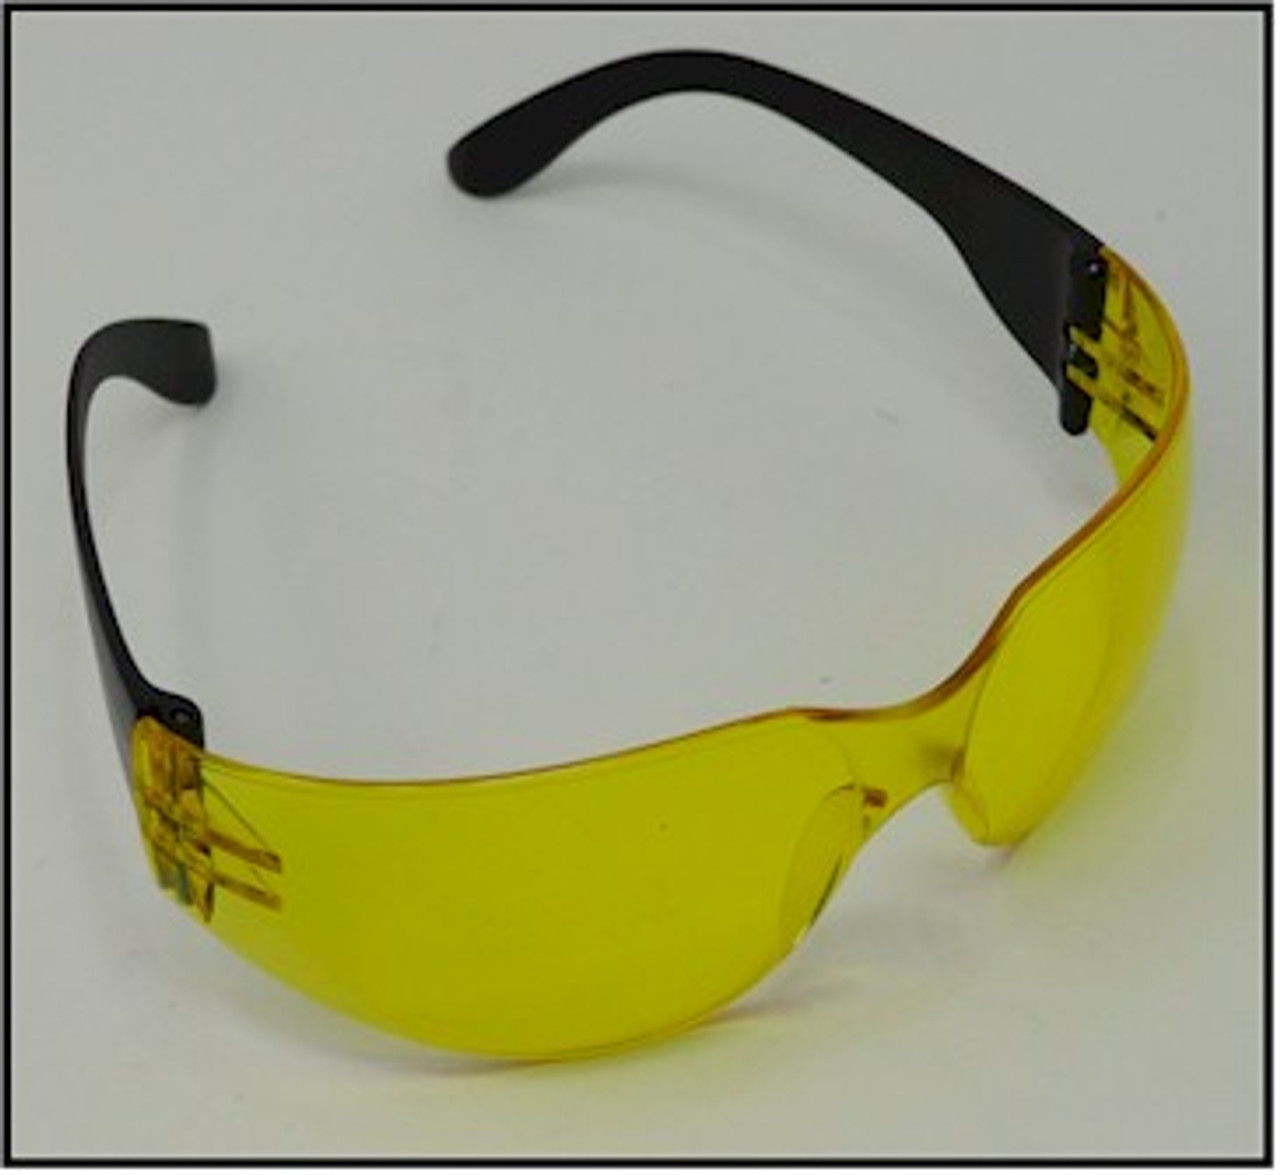 UVSPORT-YBOX6 Box of 6 UV Glasses Protection from Ultra Violet Black Light